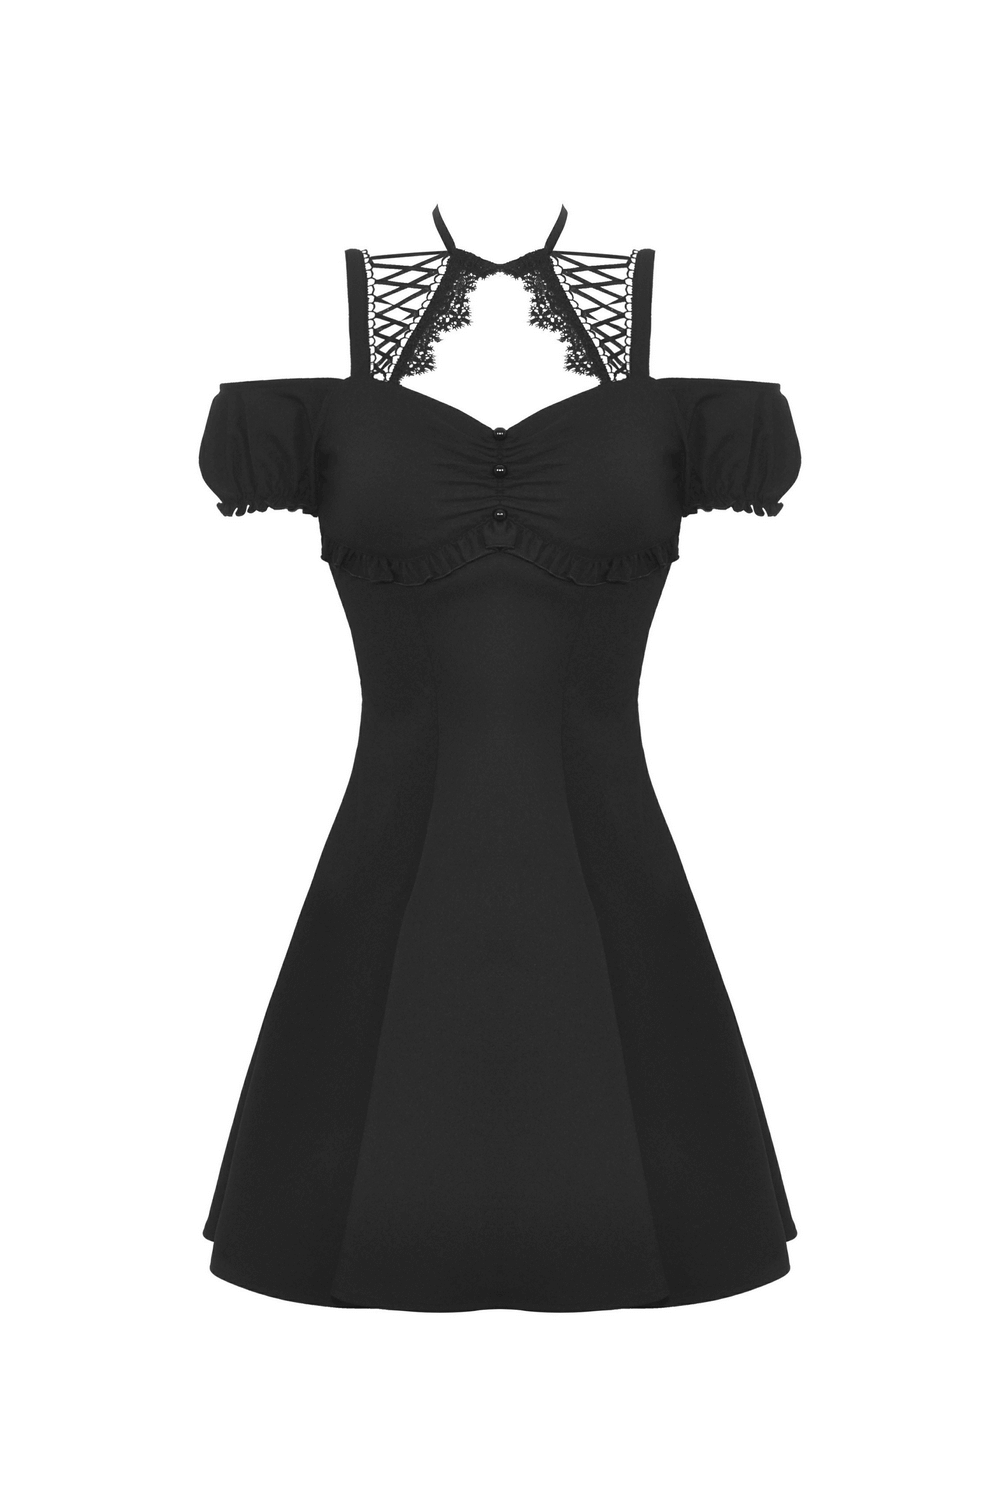 Elegant Black Dress with Unique Neckline and Sleeve Detail